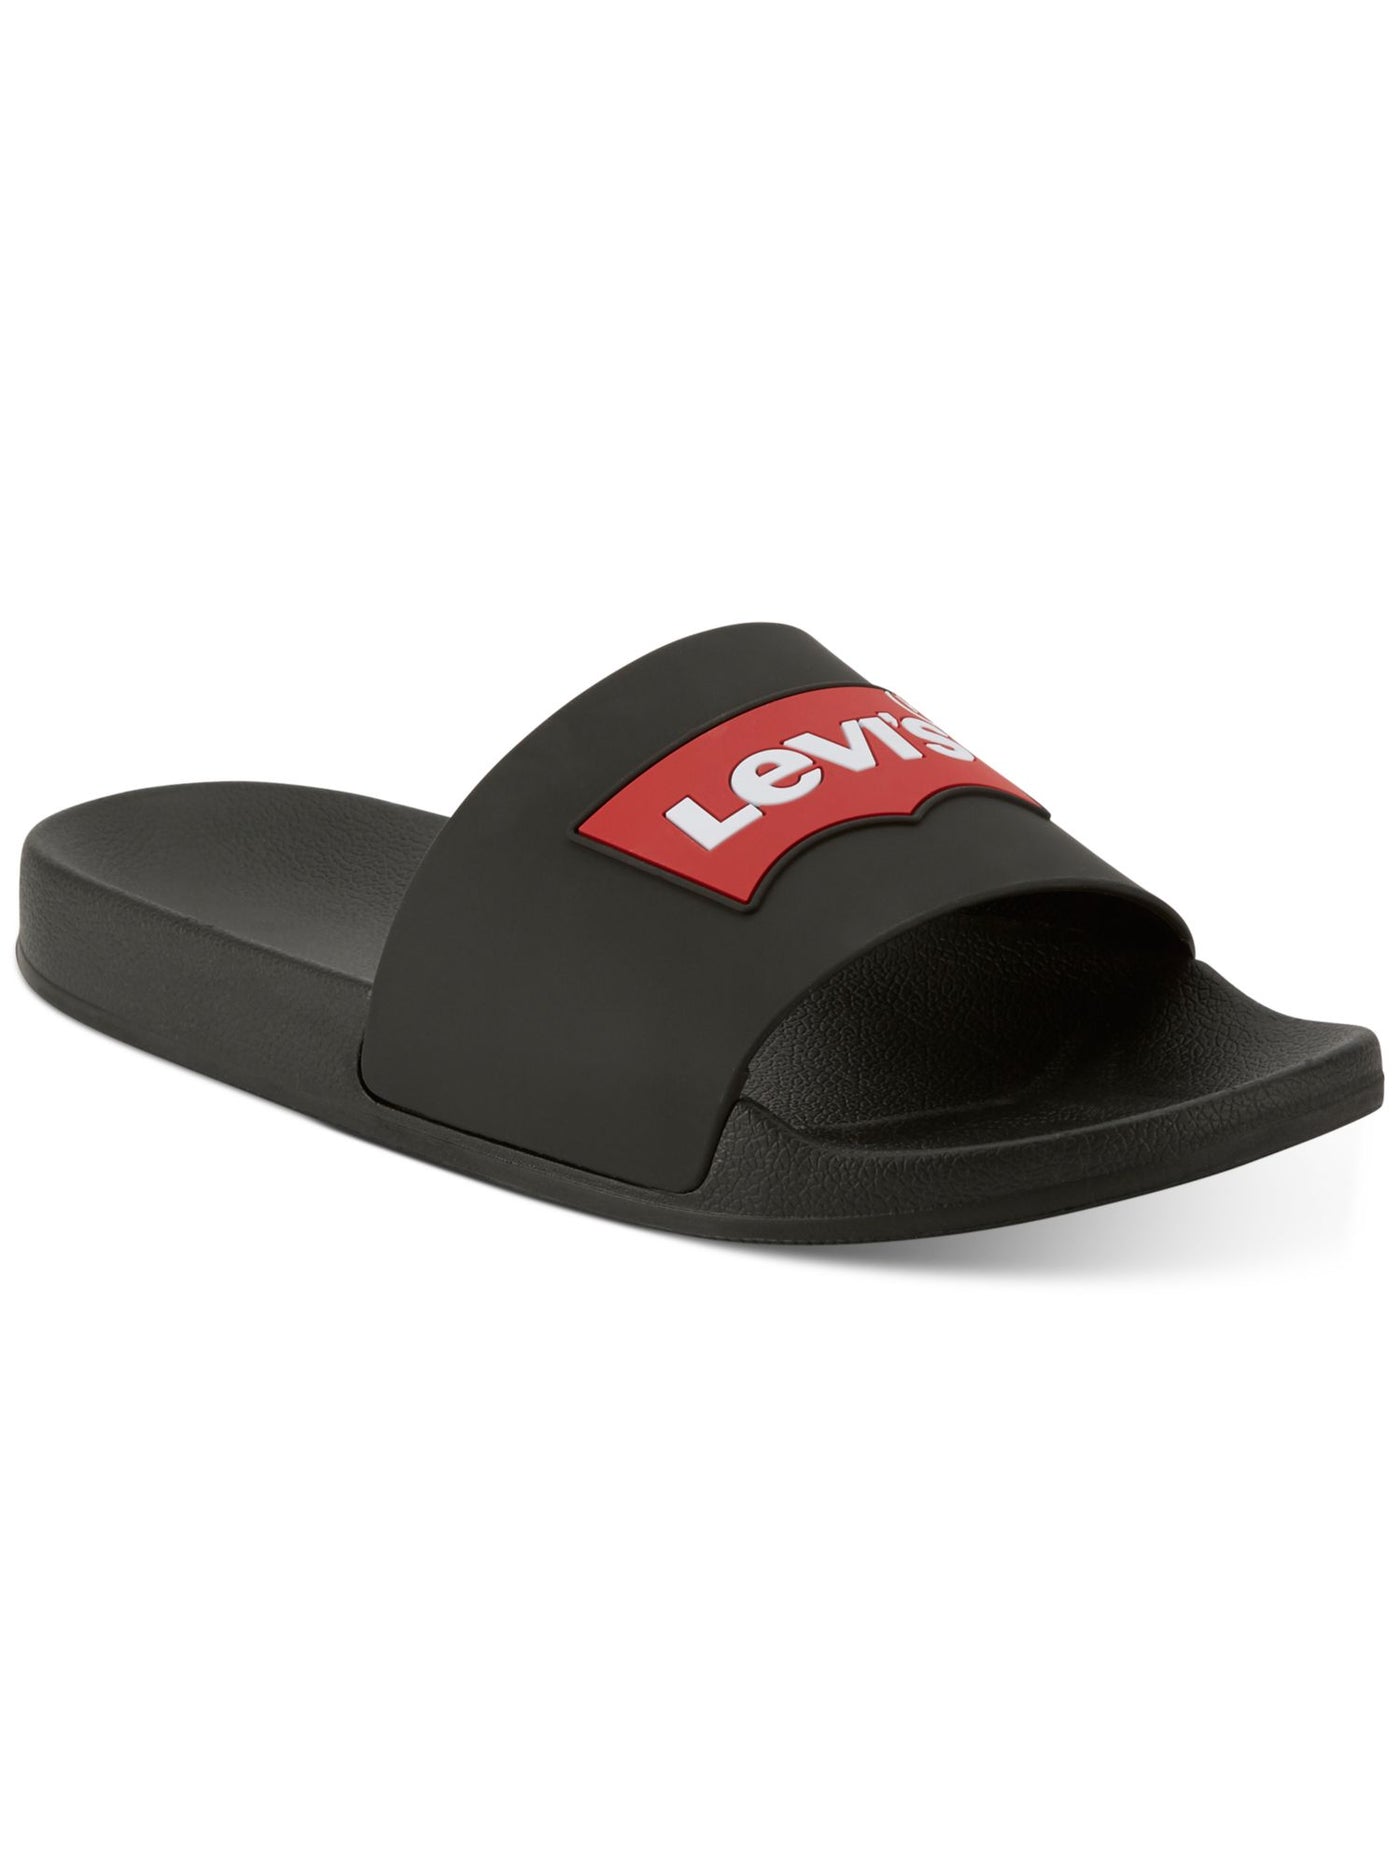 LEVI'S Mens Black Padded Batwing-logo Open Toe Slip On Slide Sandals Shoes 9 N